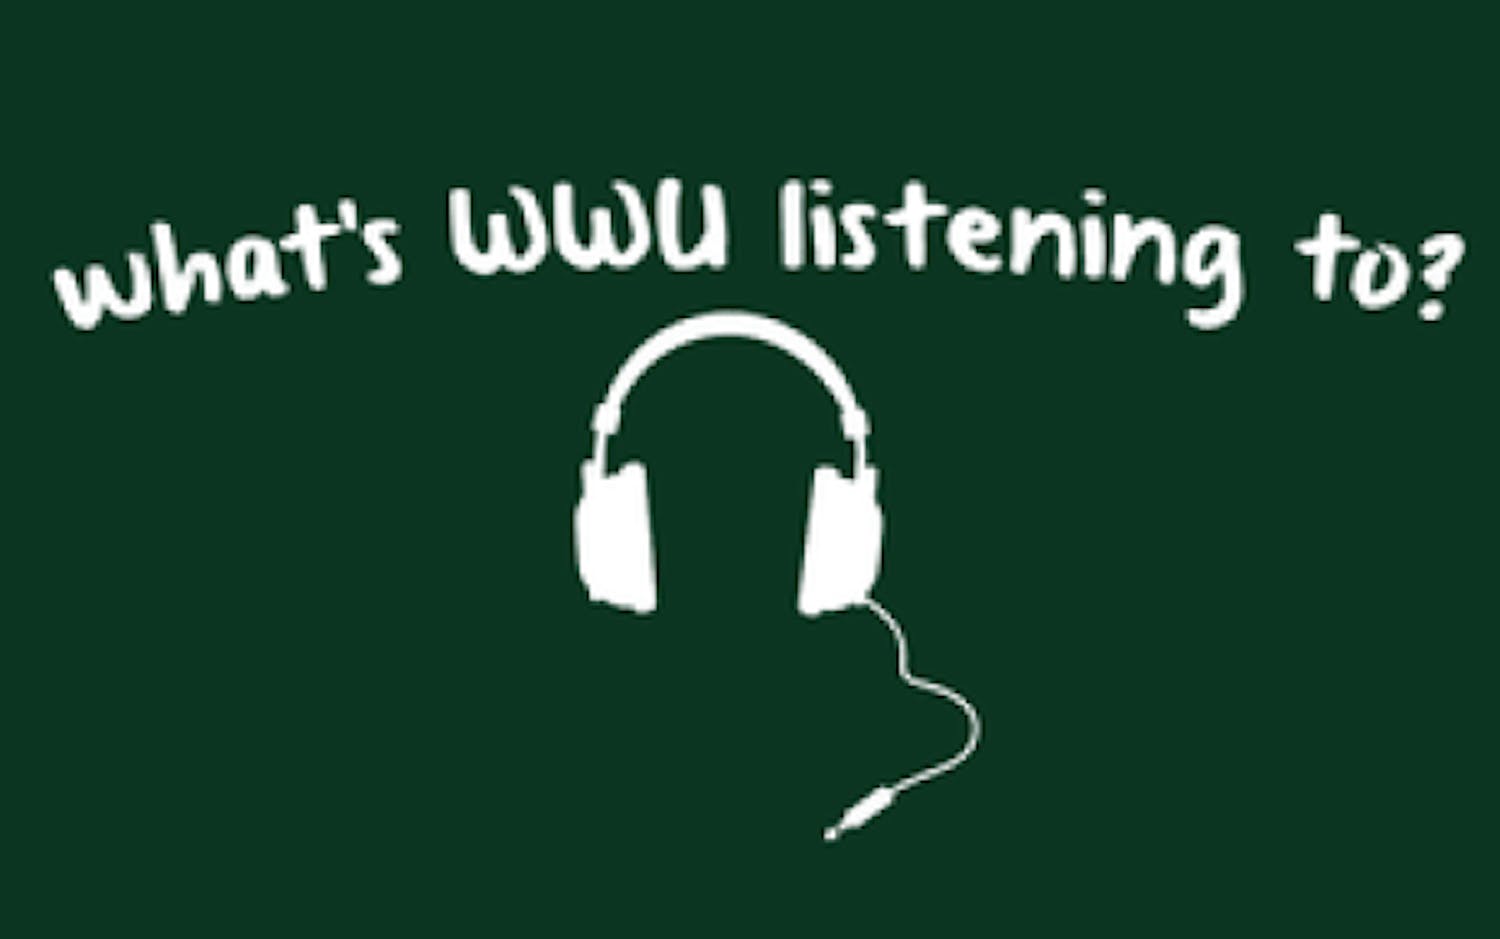 whats-wwu-listenint-to-